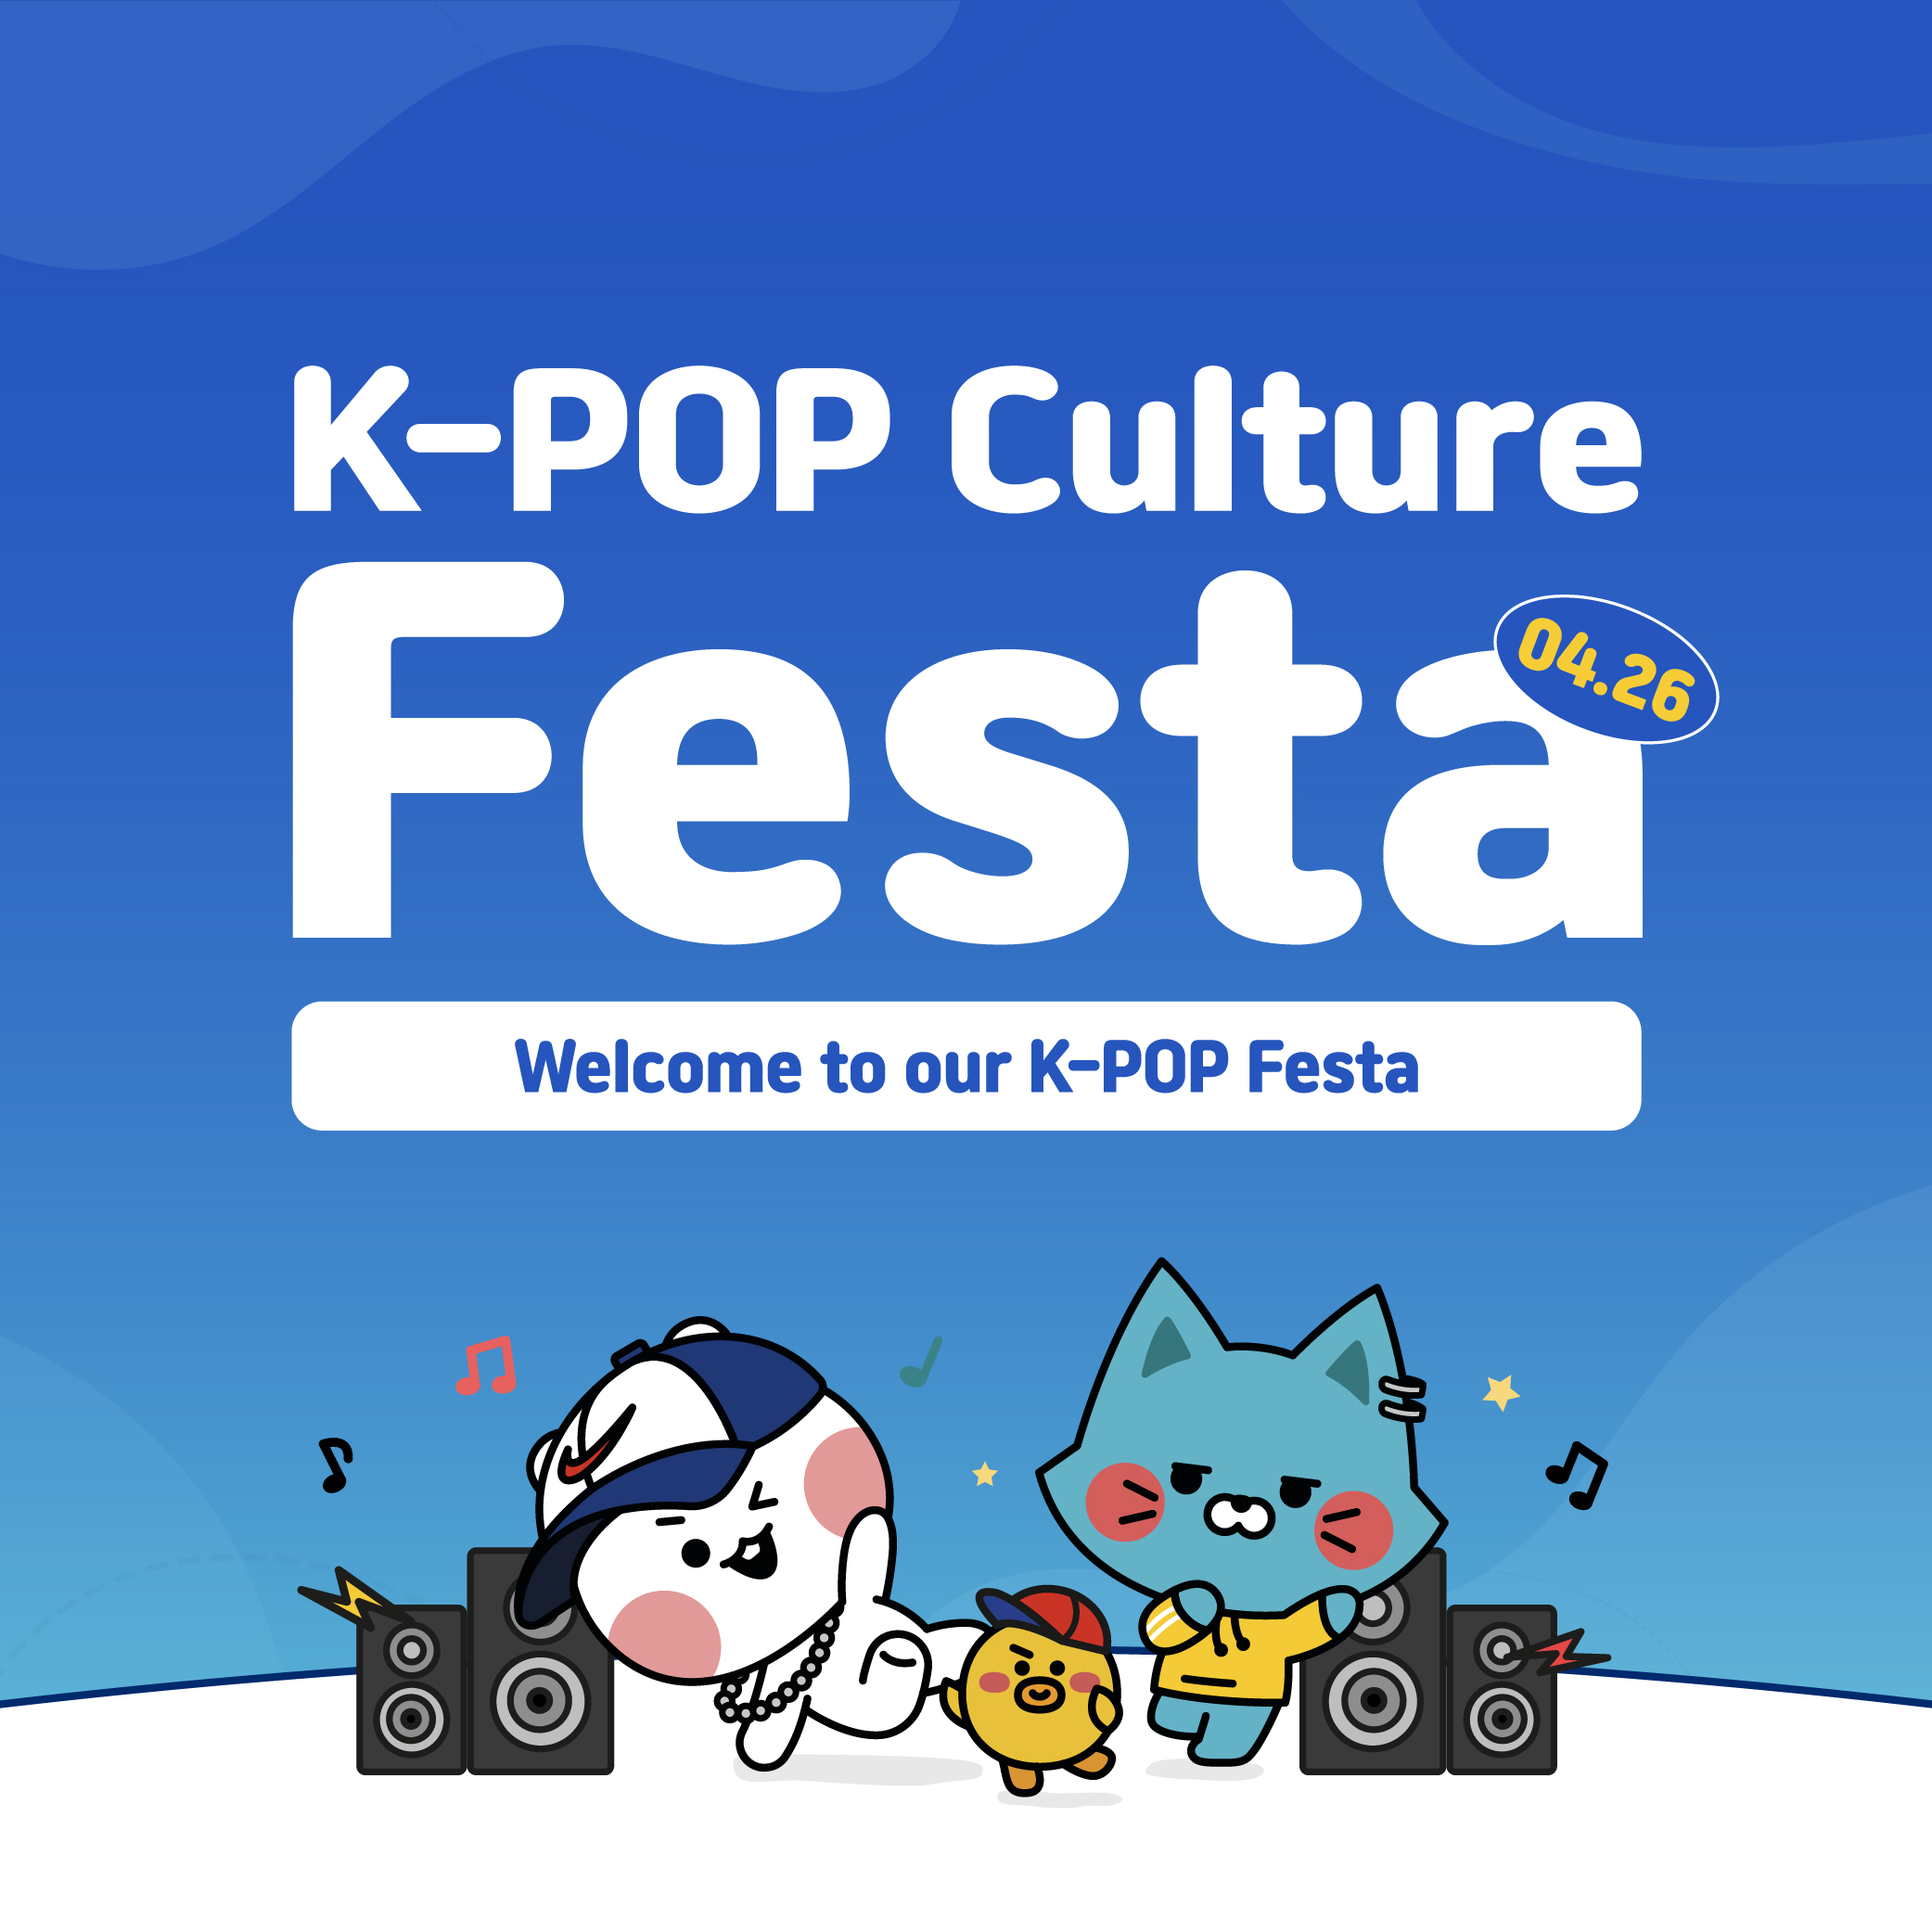 K-POP Culture Festa 4.26